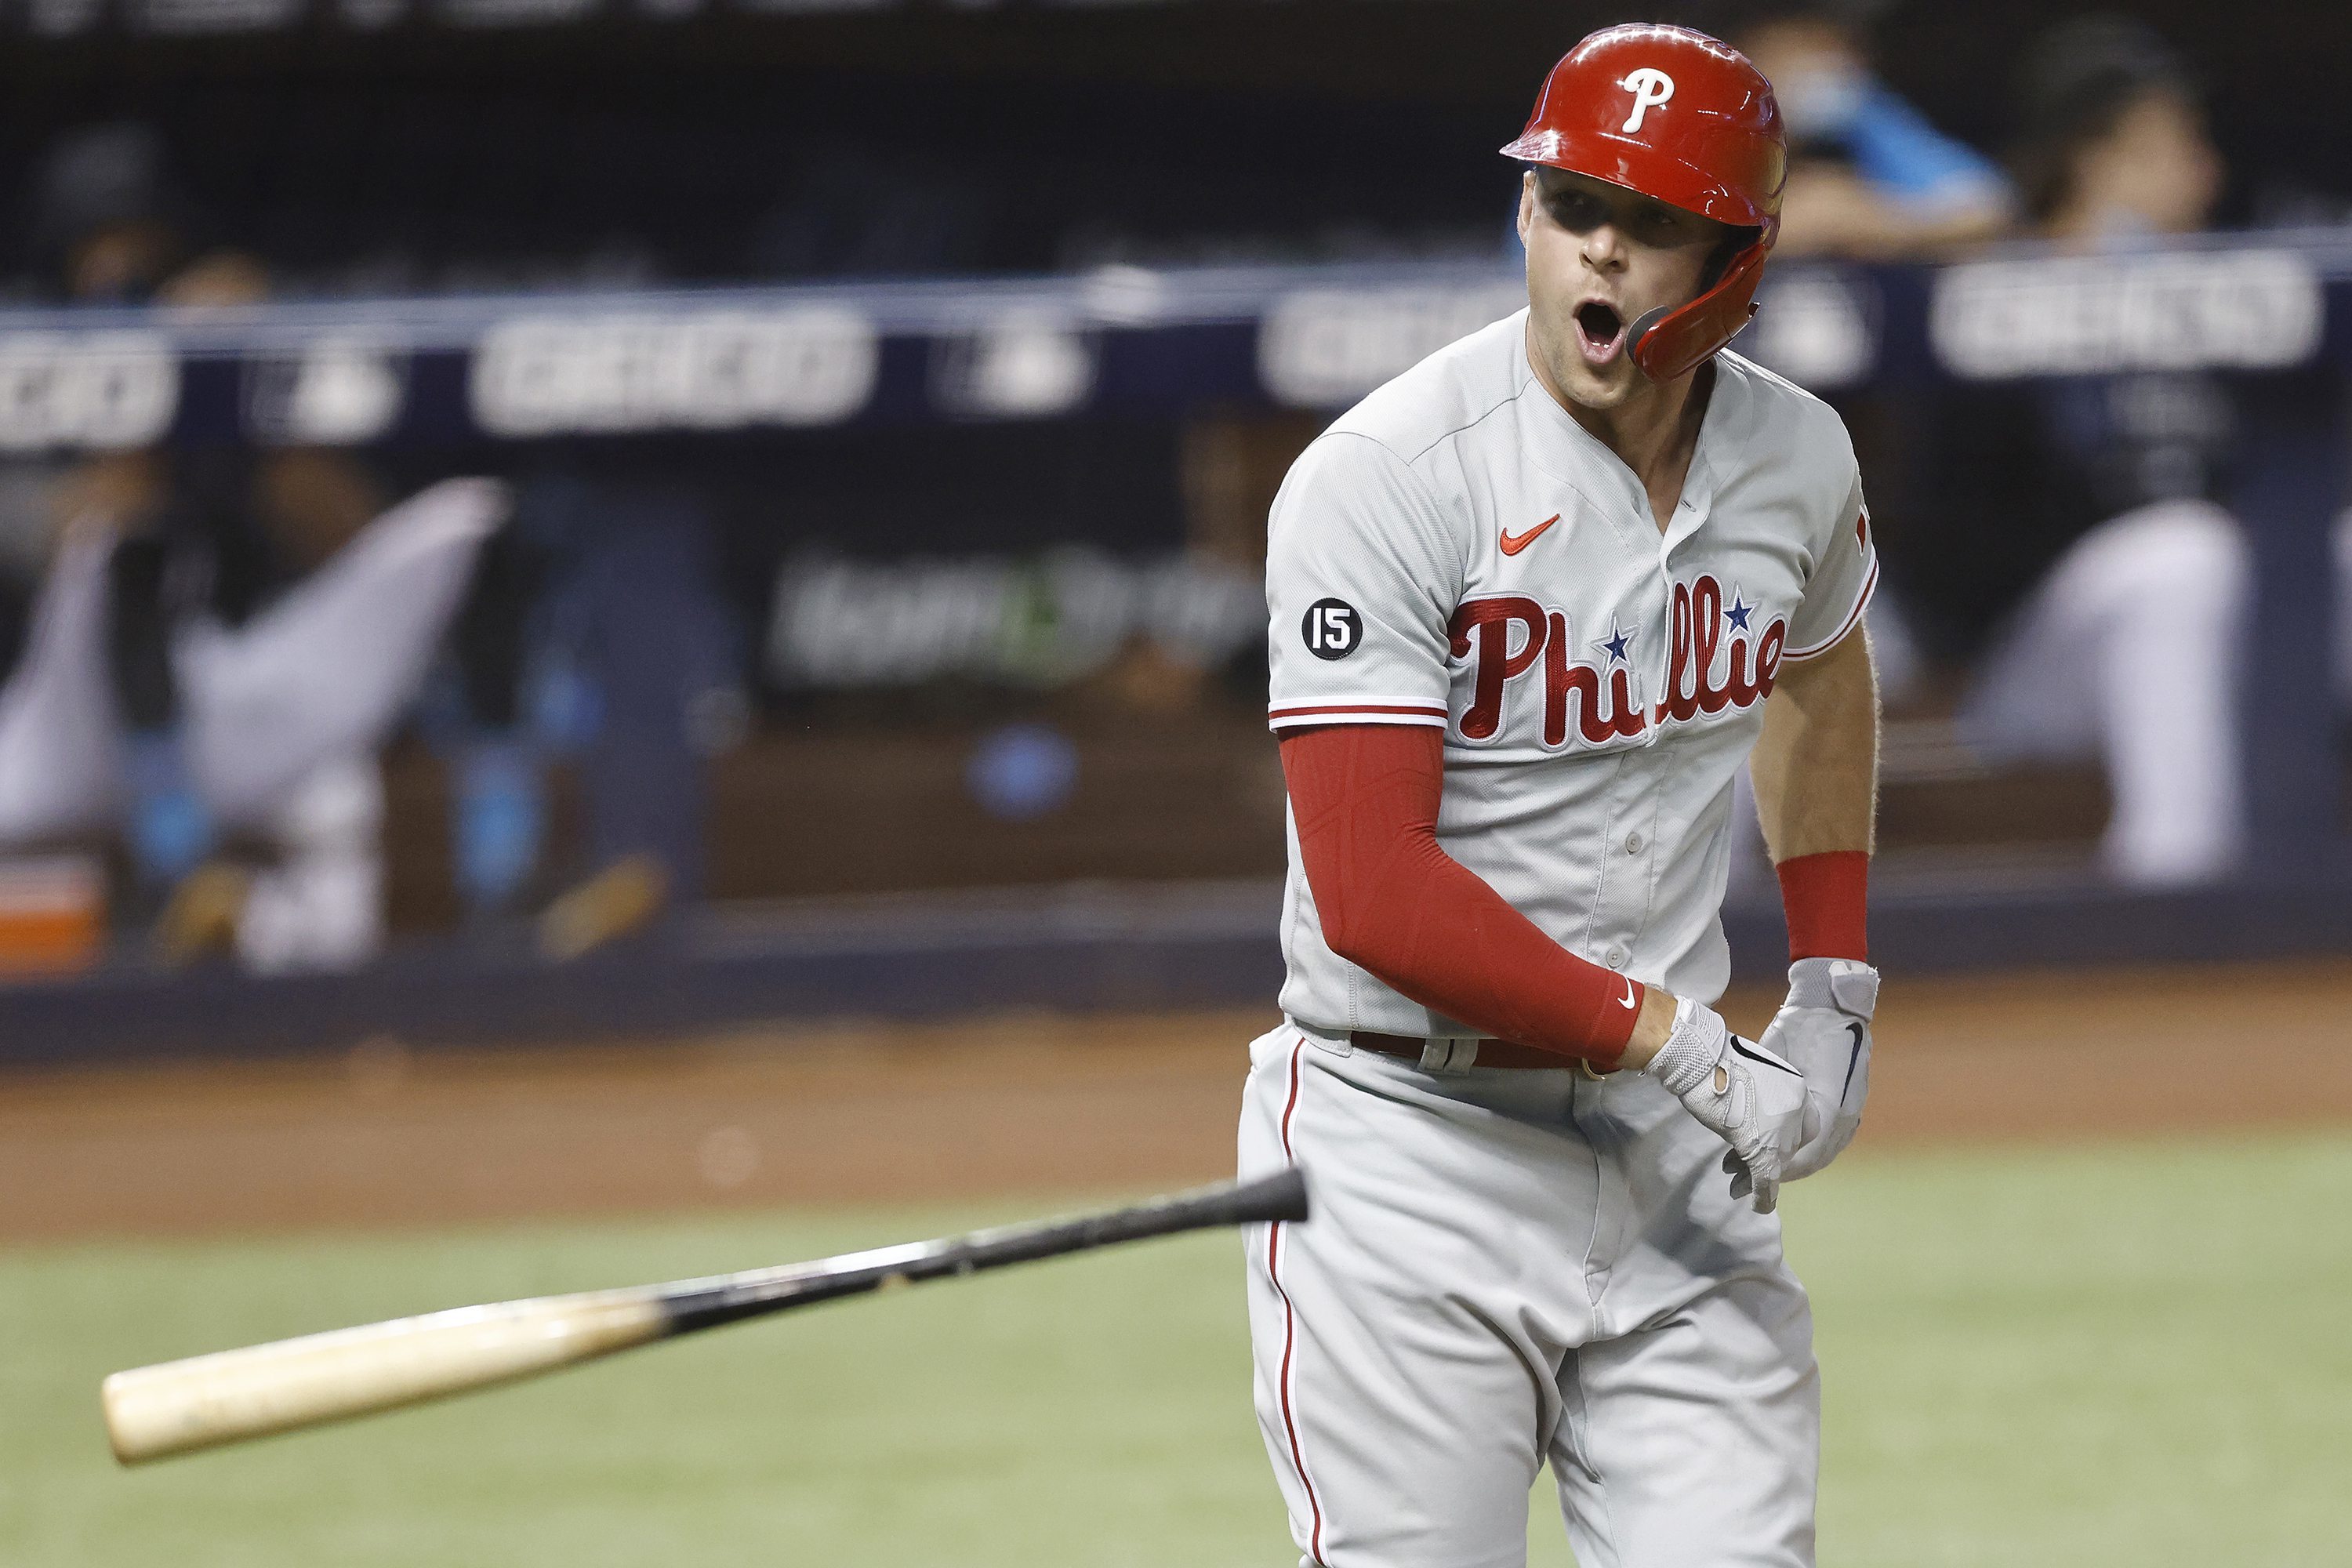 Rhys Hoskins insane home run and bat flip during Philadelphia